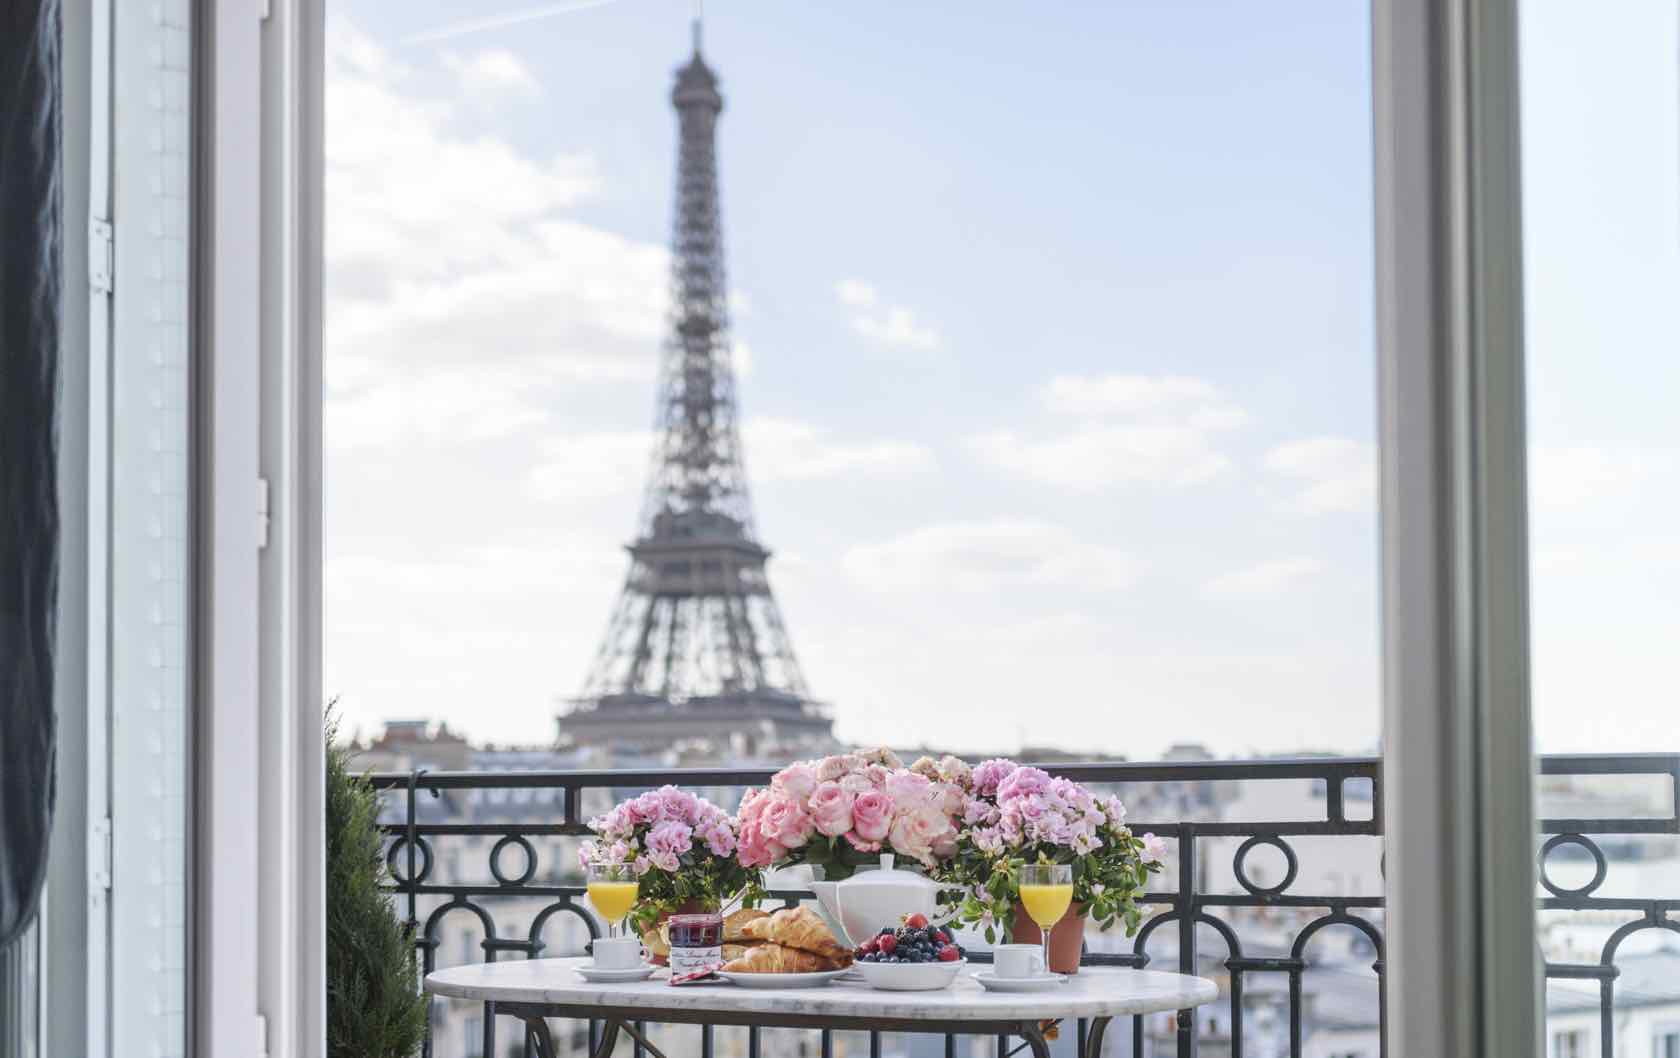 Outdoor dining in Paris